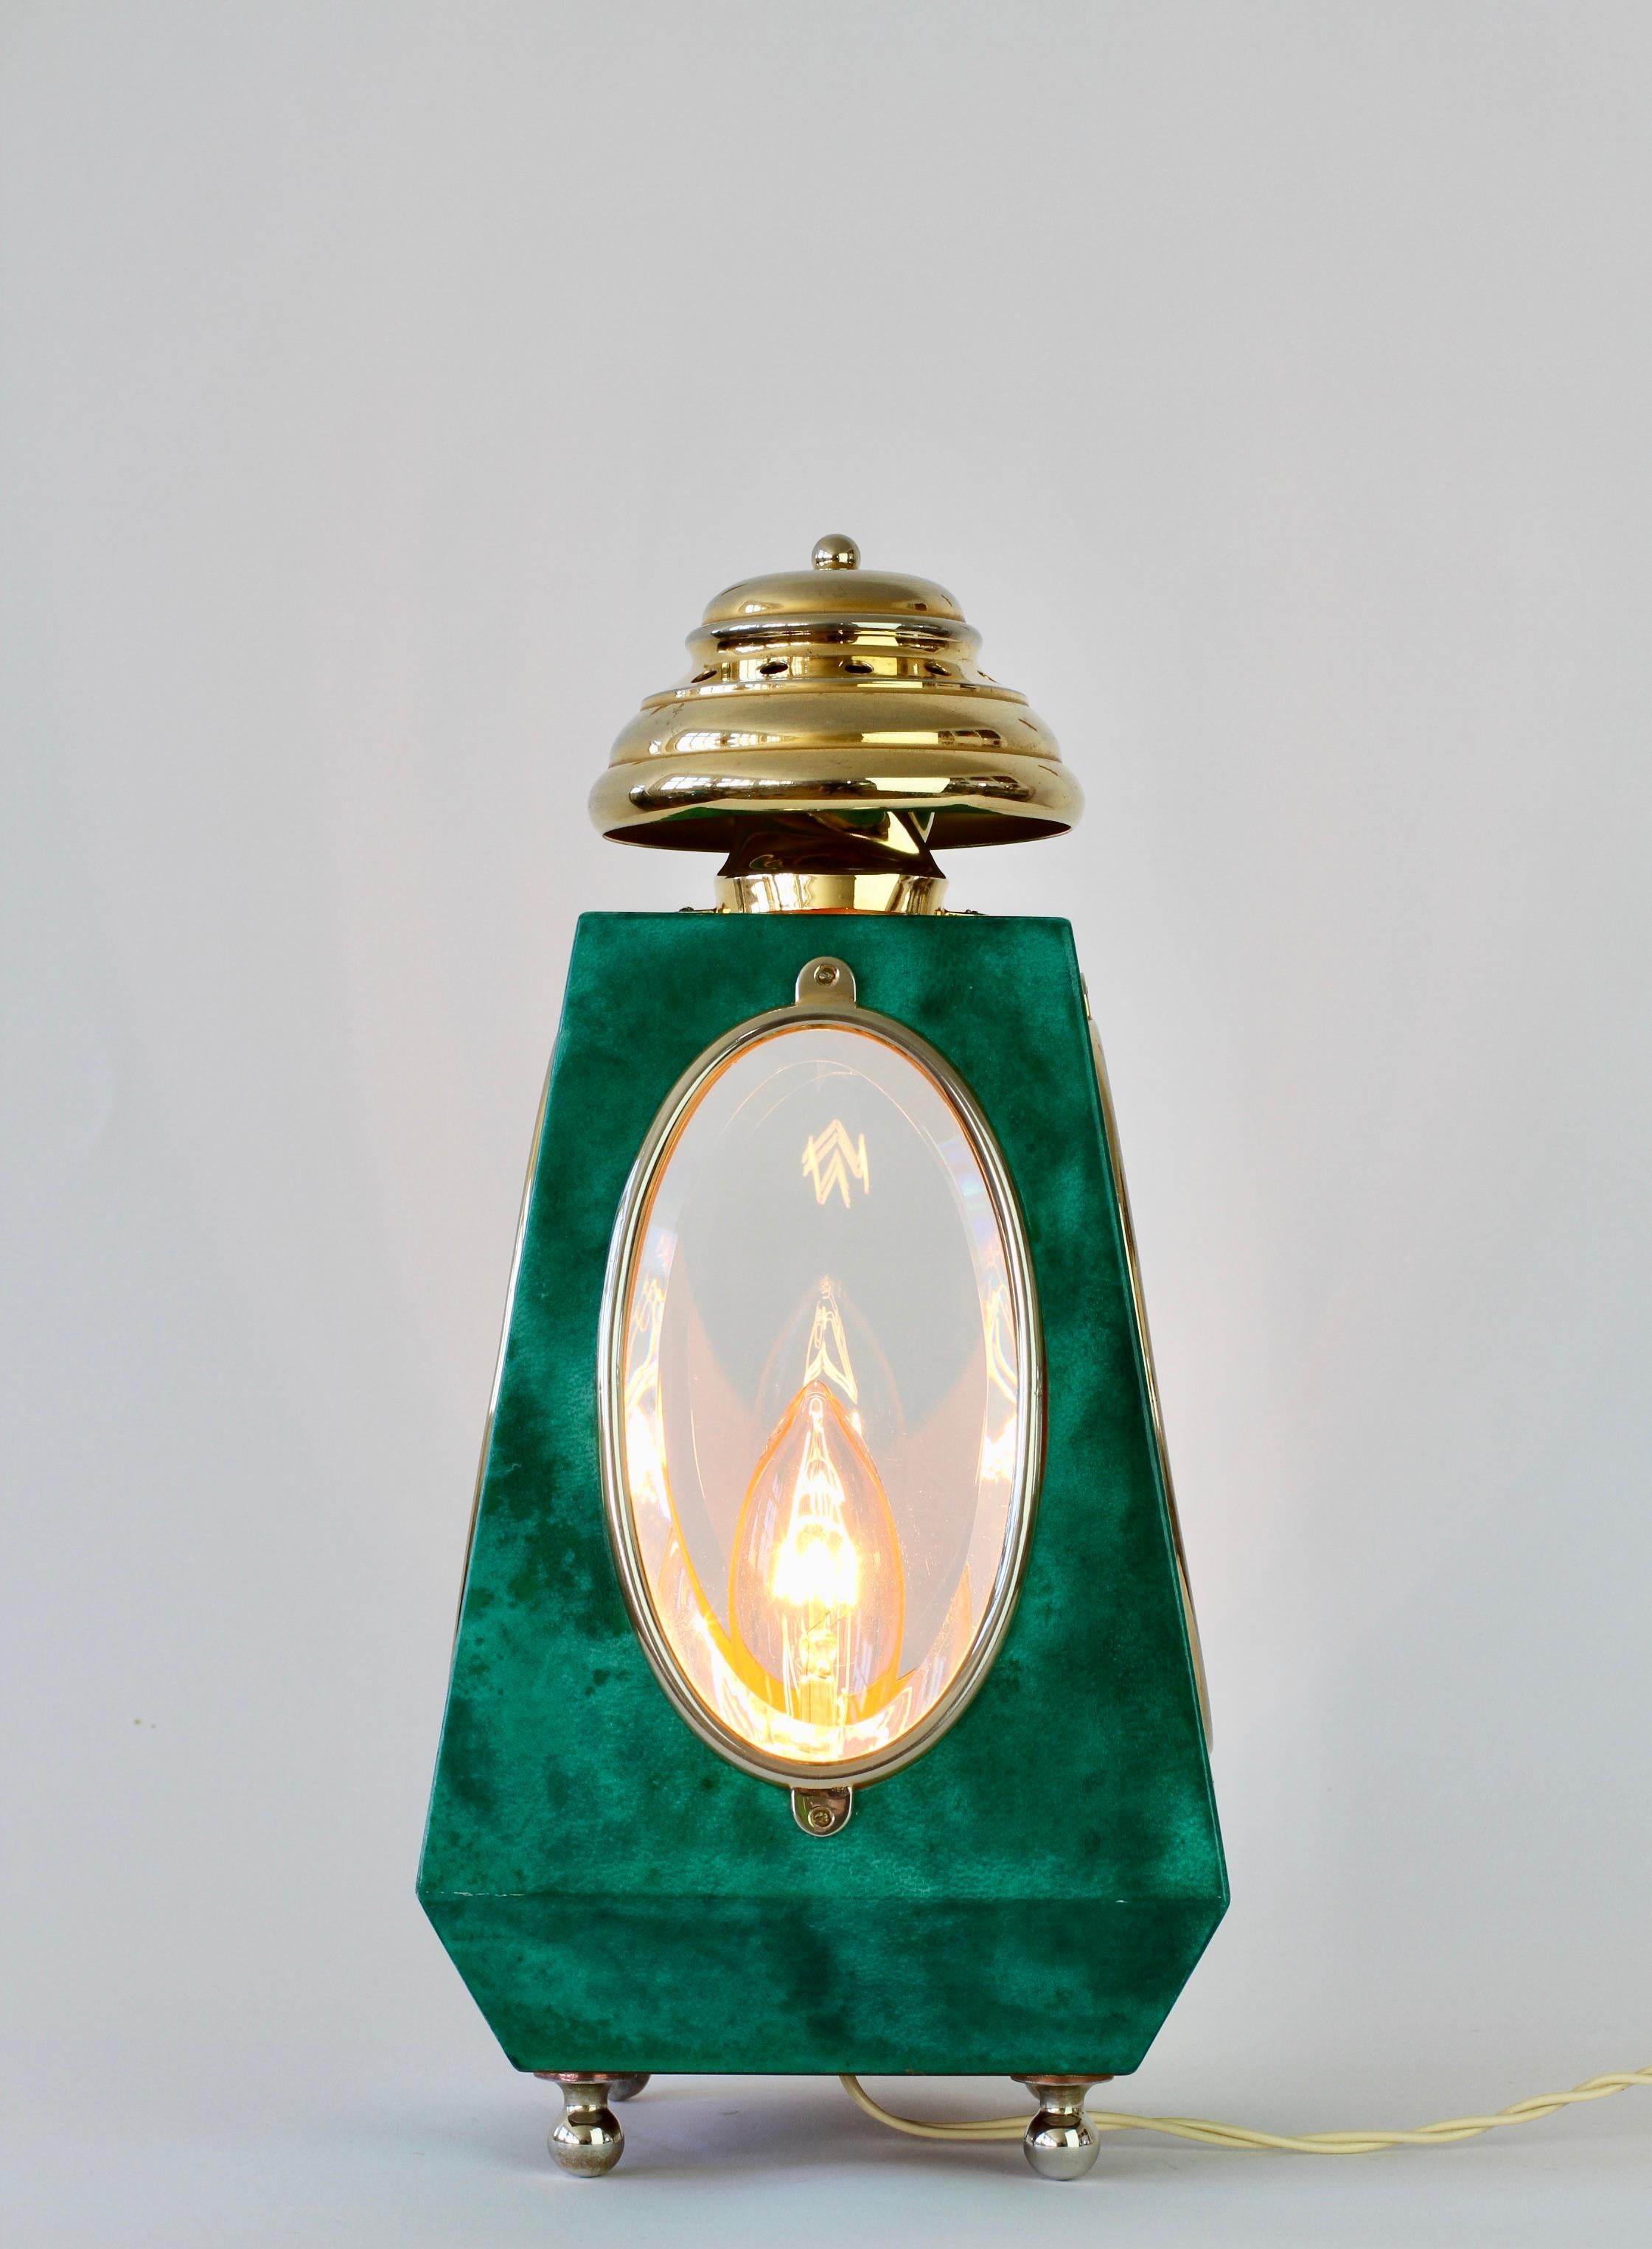 Aldo Tura 1960s Midcentury Table Lamp / Lantern in Green Italian Goatskin 4